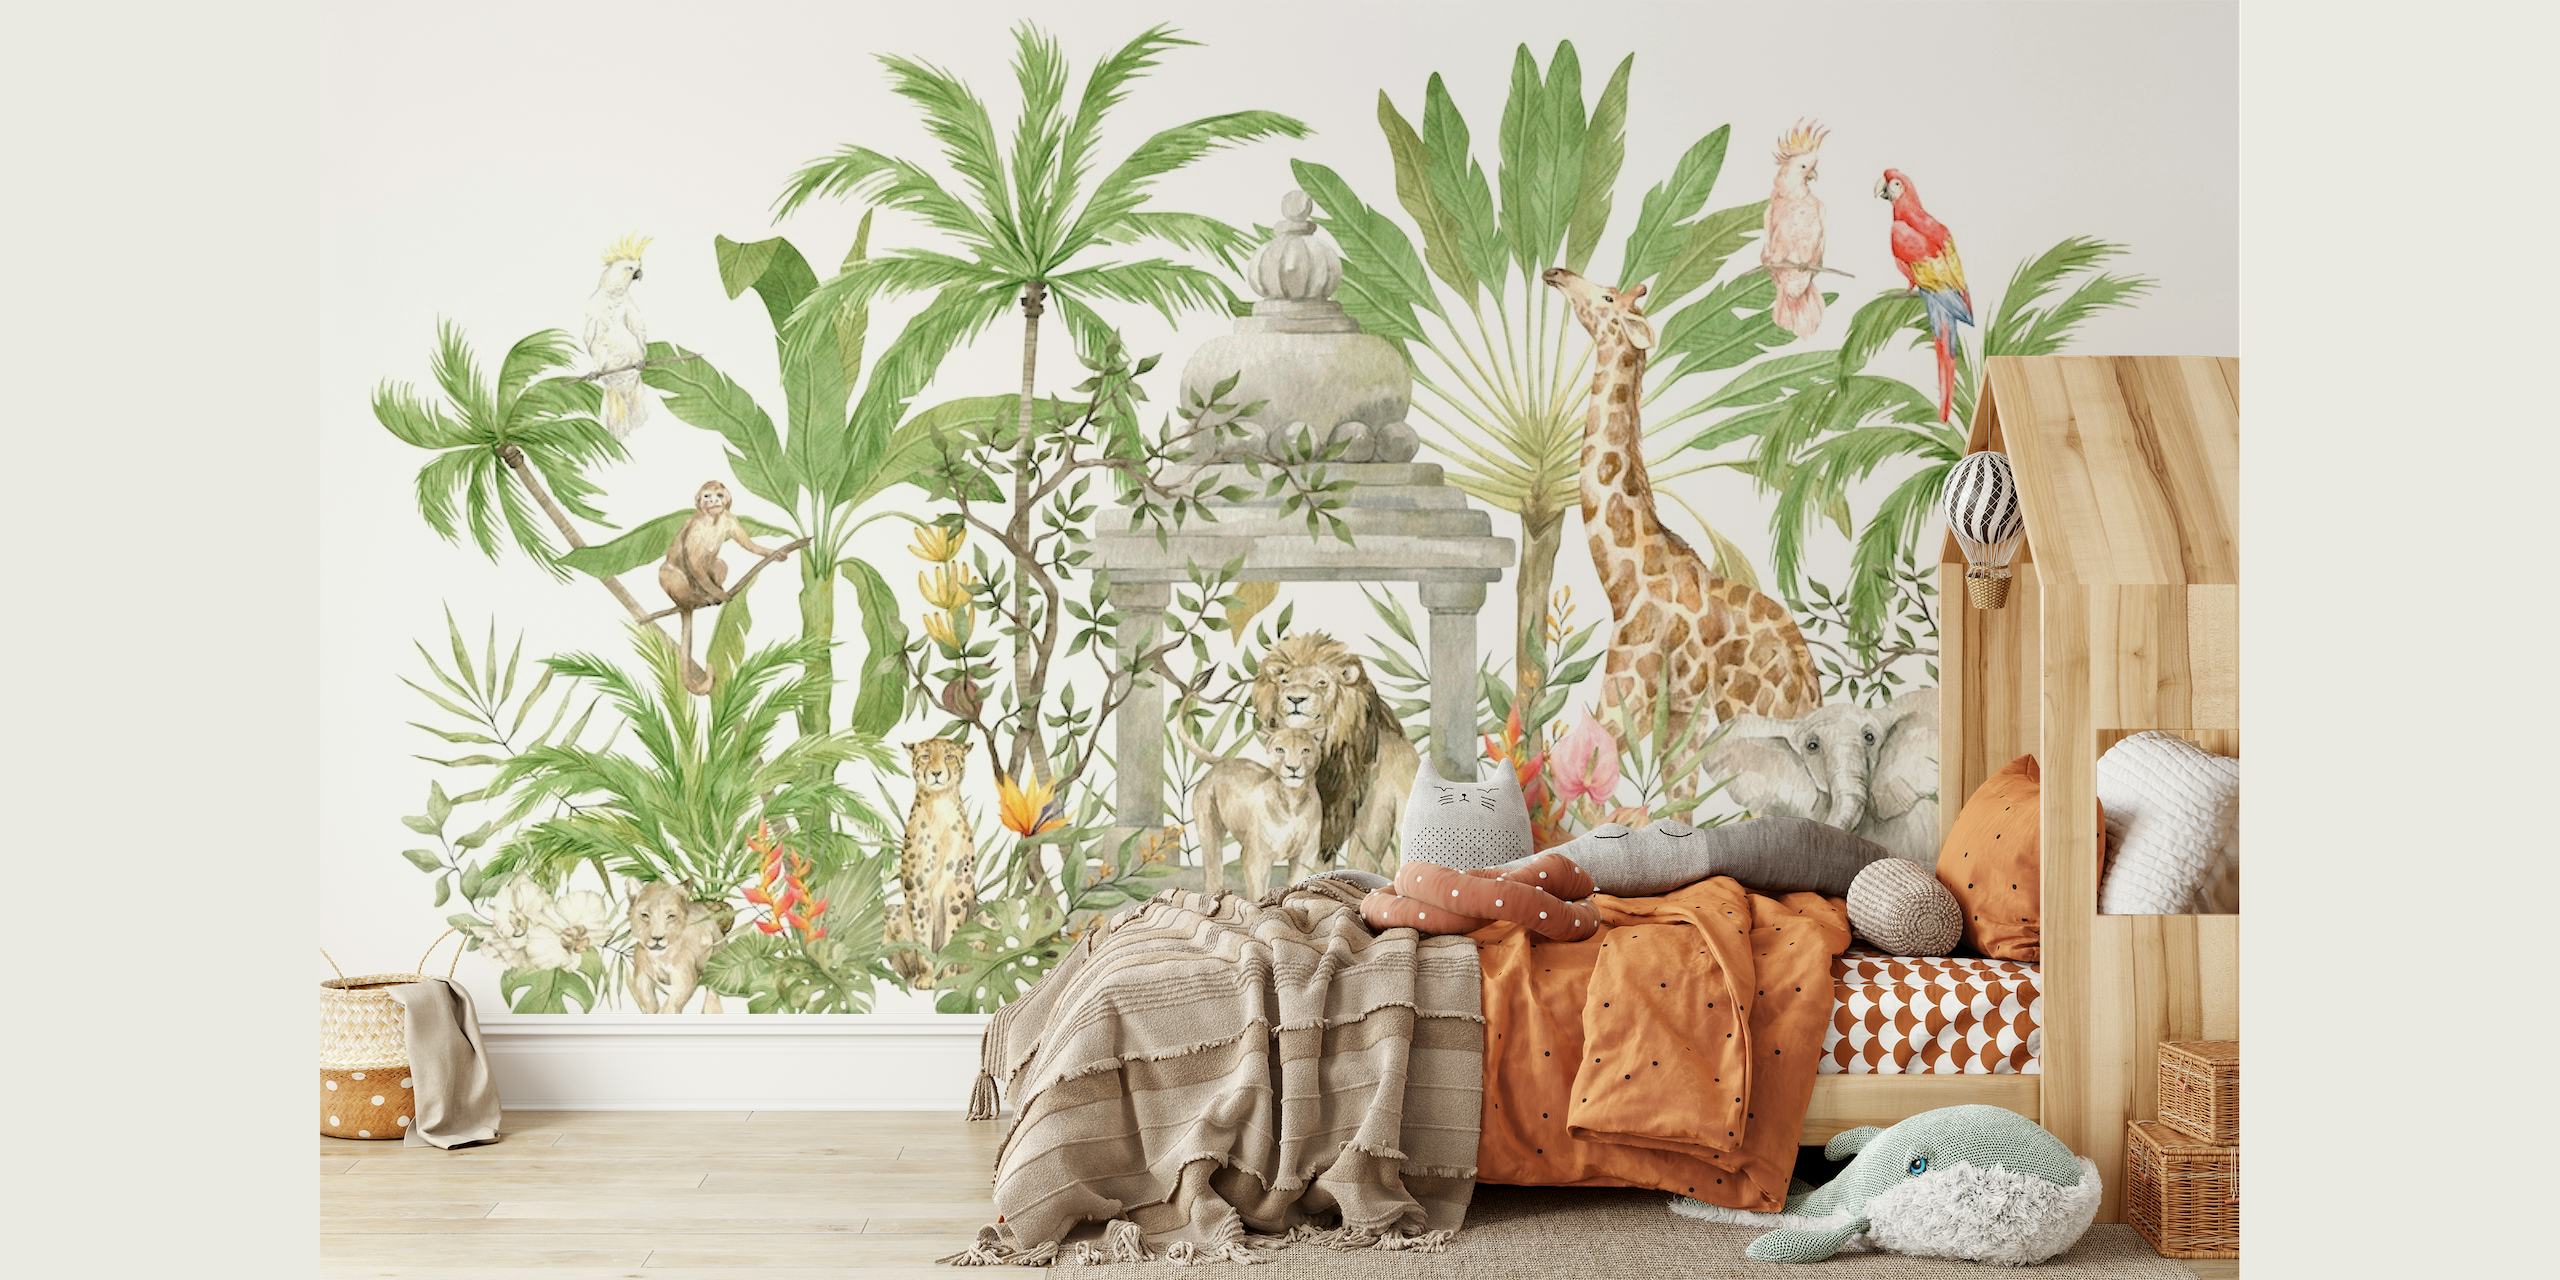 Afrikanske dyr-vægmaleri med løver, giraffer og elefanter blandt palmer